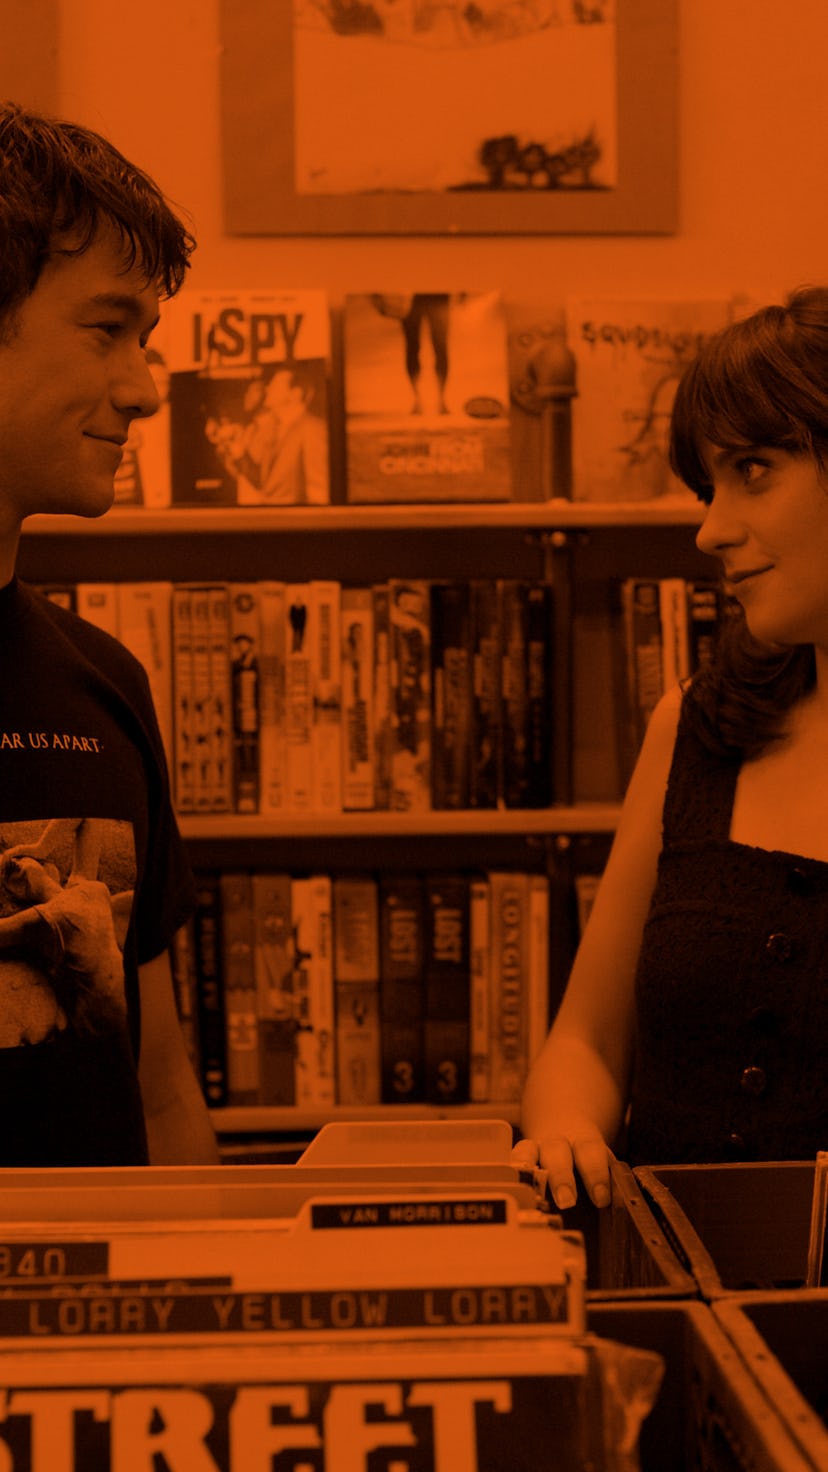 Joseph Gordon-Levitt and Zoe Deschanel looking at each other in the film "500 Days of Summer" 